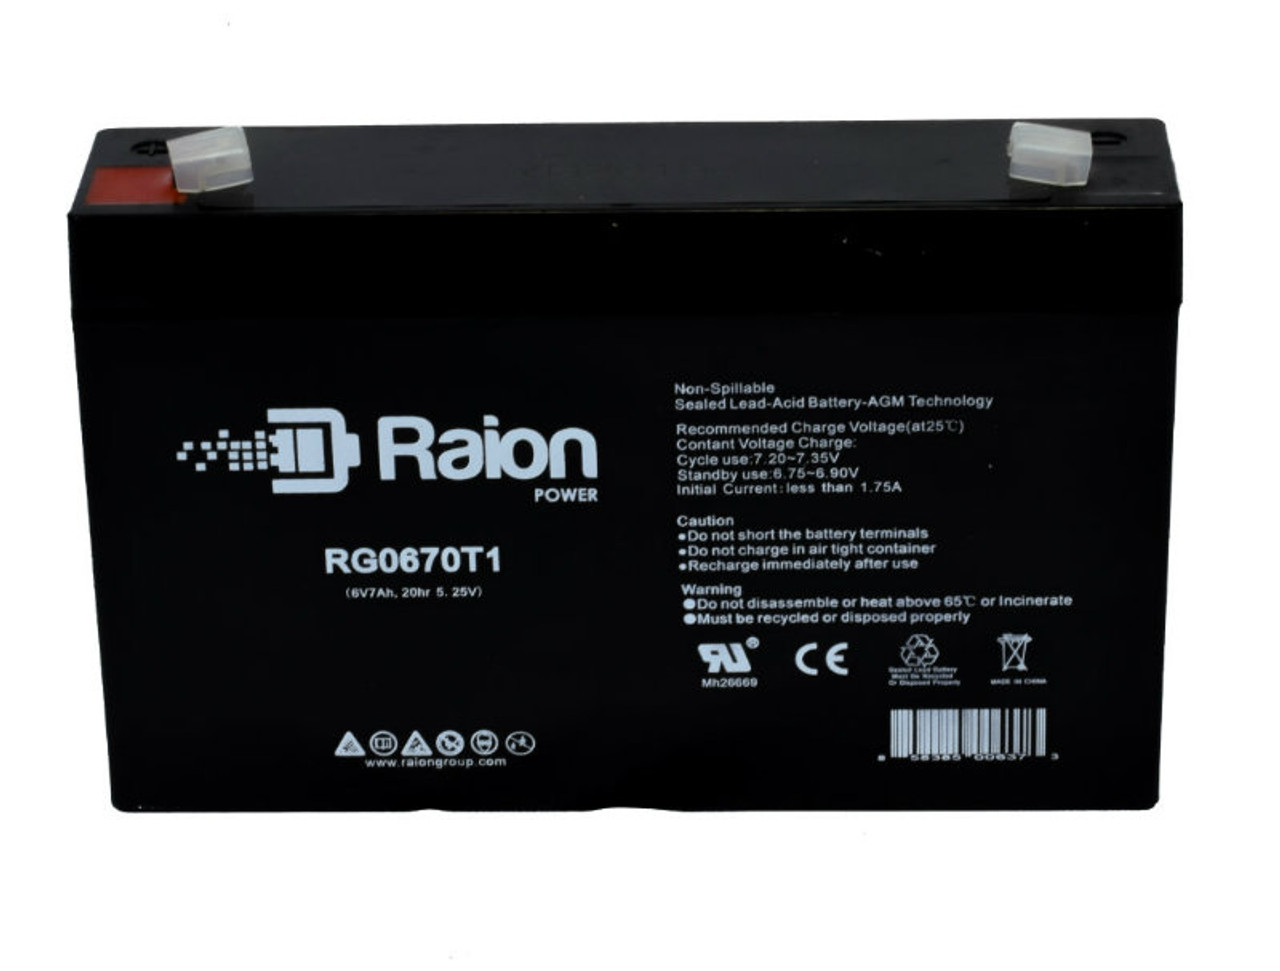 Raion Power RG0670T1 SLA Battery for Johnson Controls GC645 OEM Battery